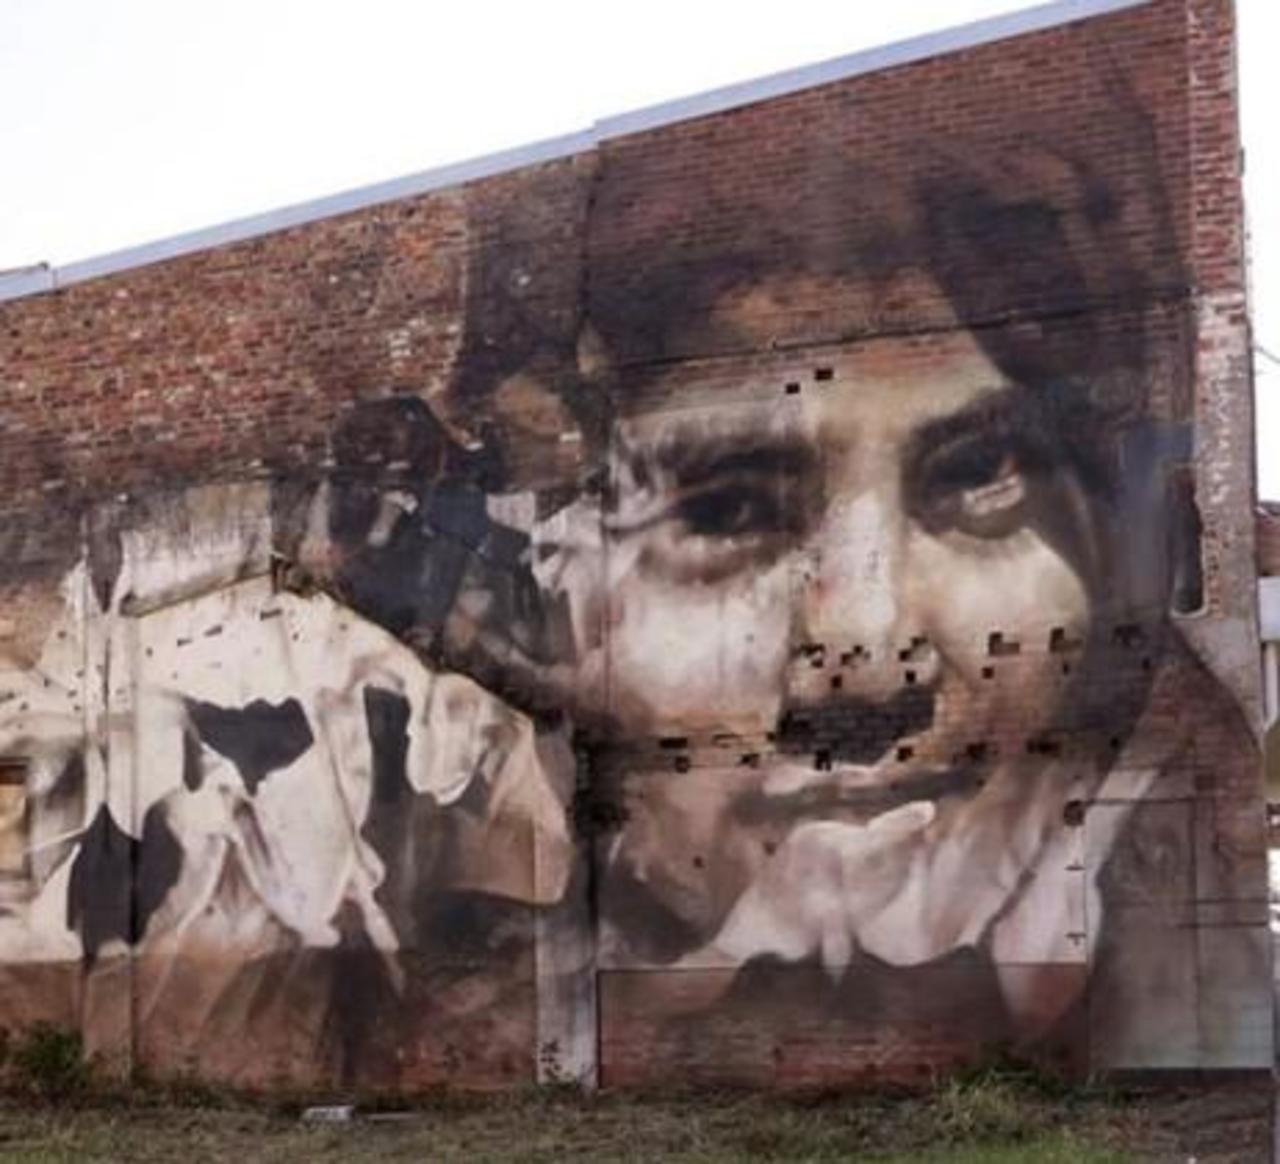 New Australiana II, 2015
#PortKembla #Australia
#GuidoVanHelten ()
#streetart #graffiti #art http://t.co/Akduz1imAI